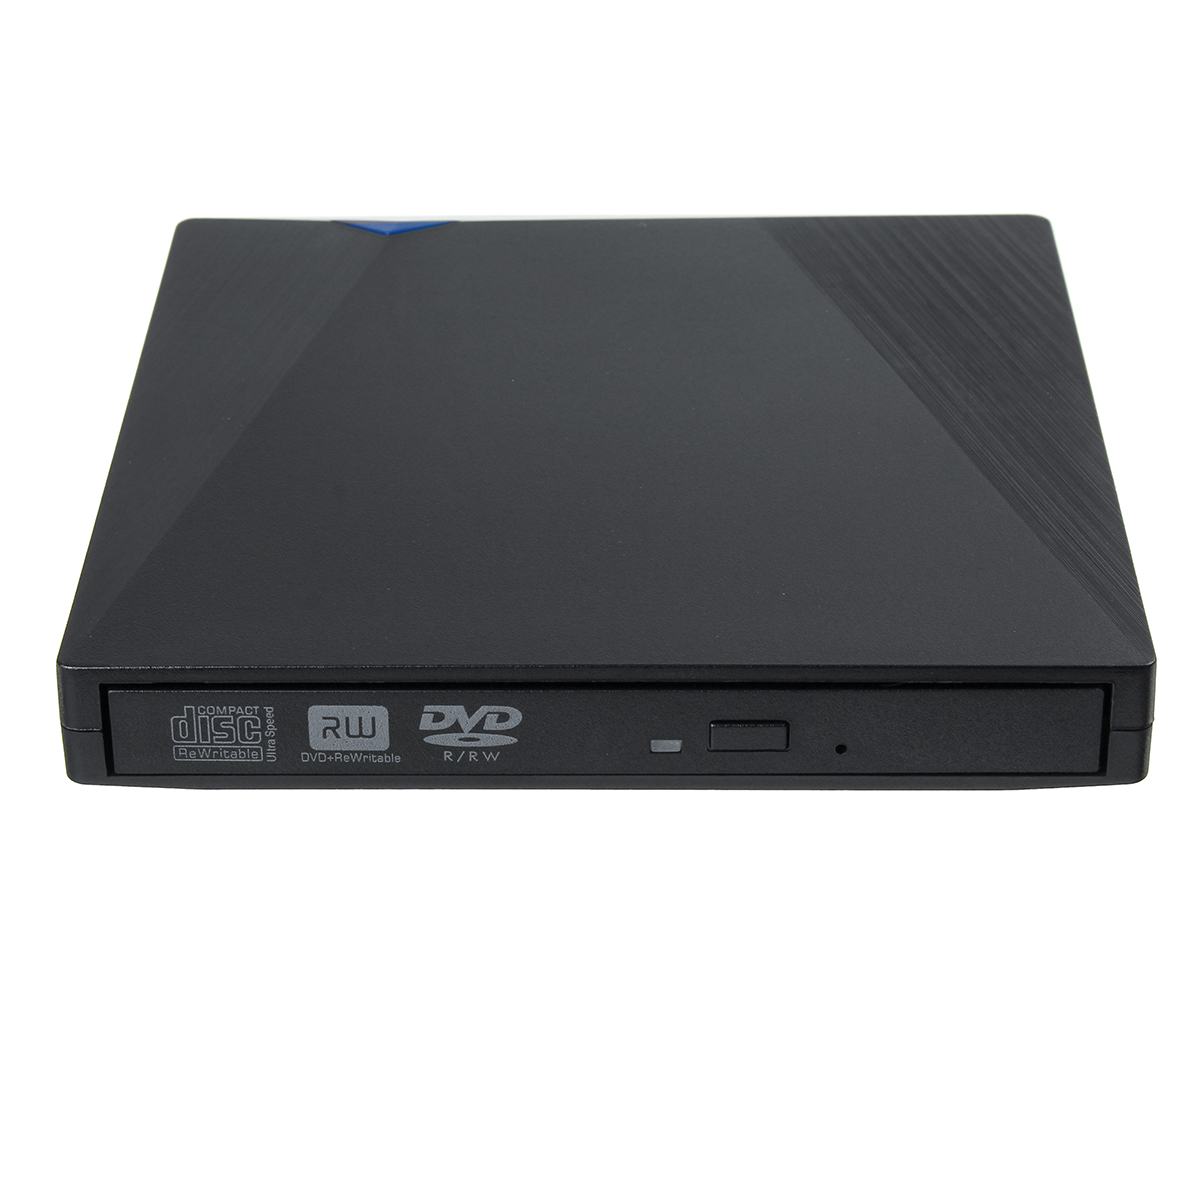 Type-C-USB-30-External-DVD-Burner-Writer-Recorder-Player-DVD-RW-Optical-Drive-CDDVD-ROM-Player-for-L-1710613-8